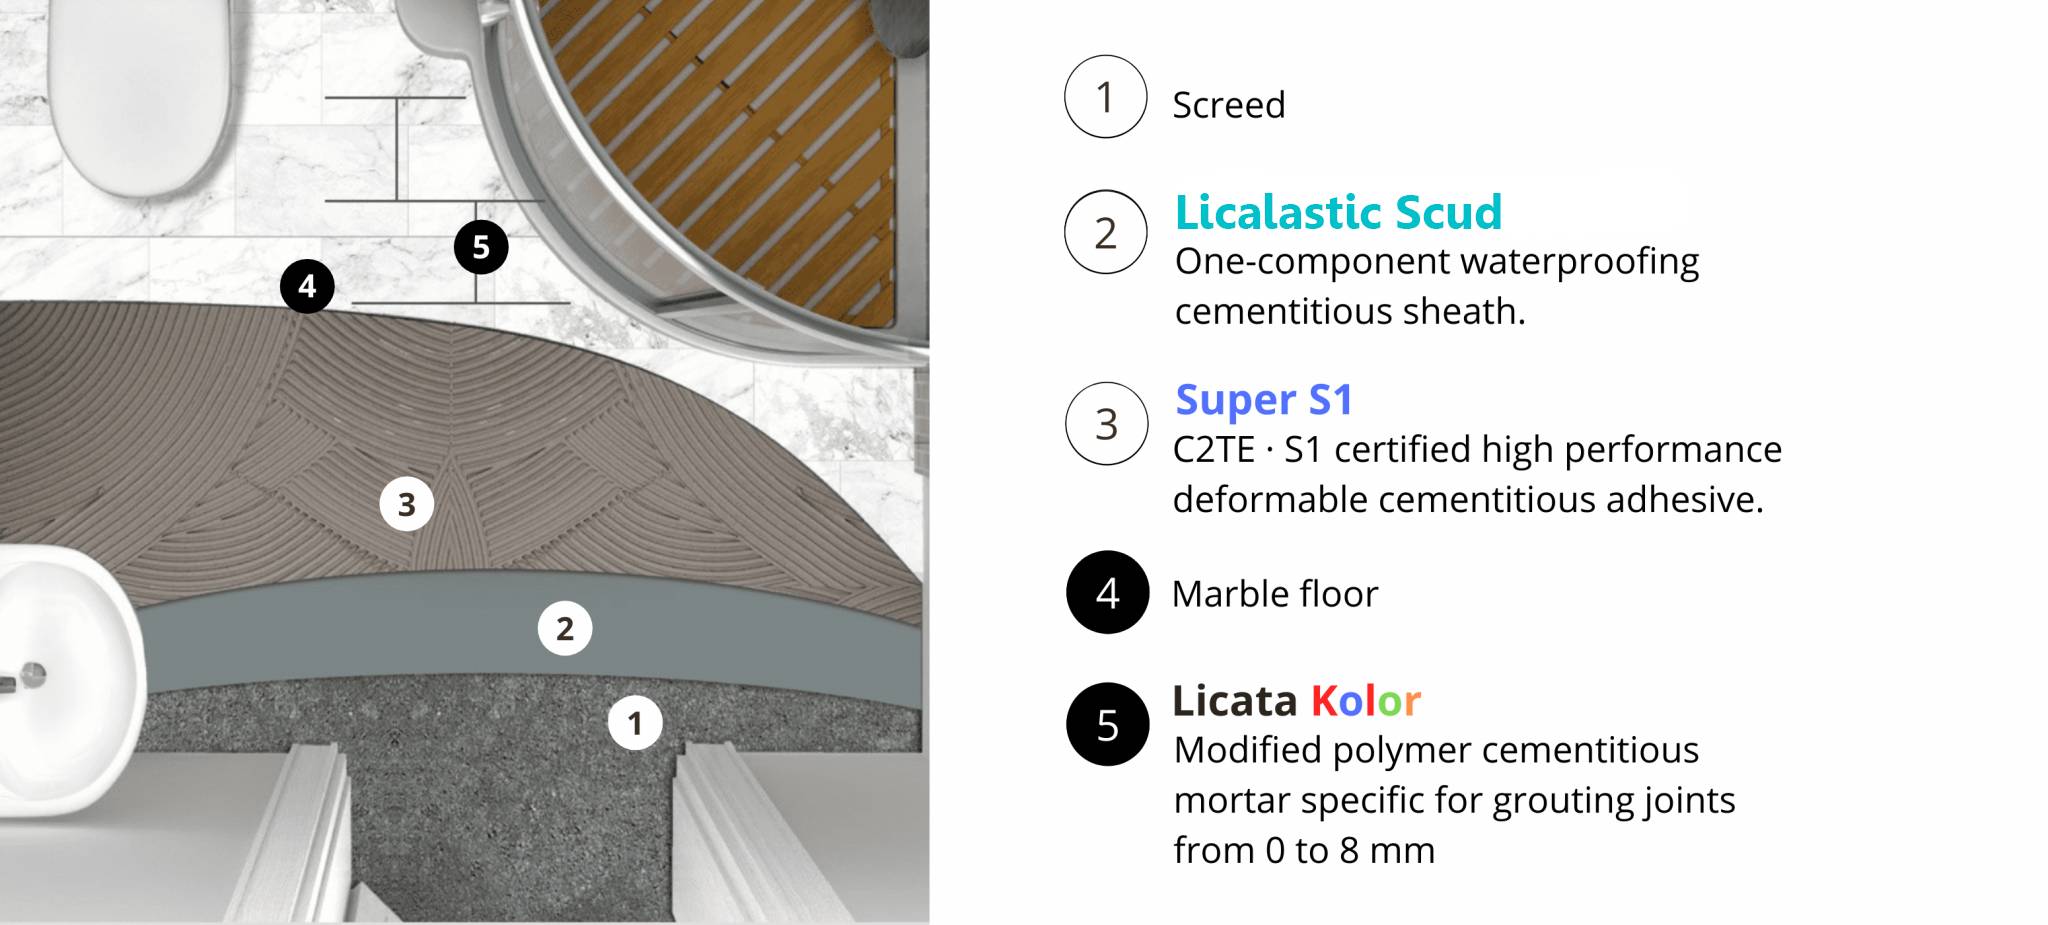 Licata Shower - Wet Room Waterproofing System